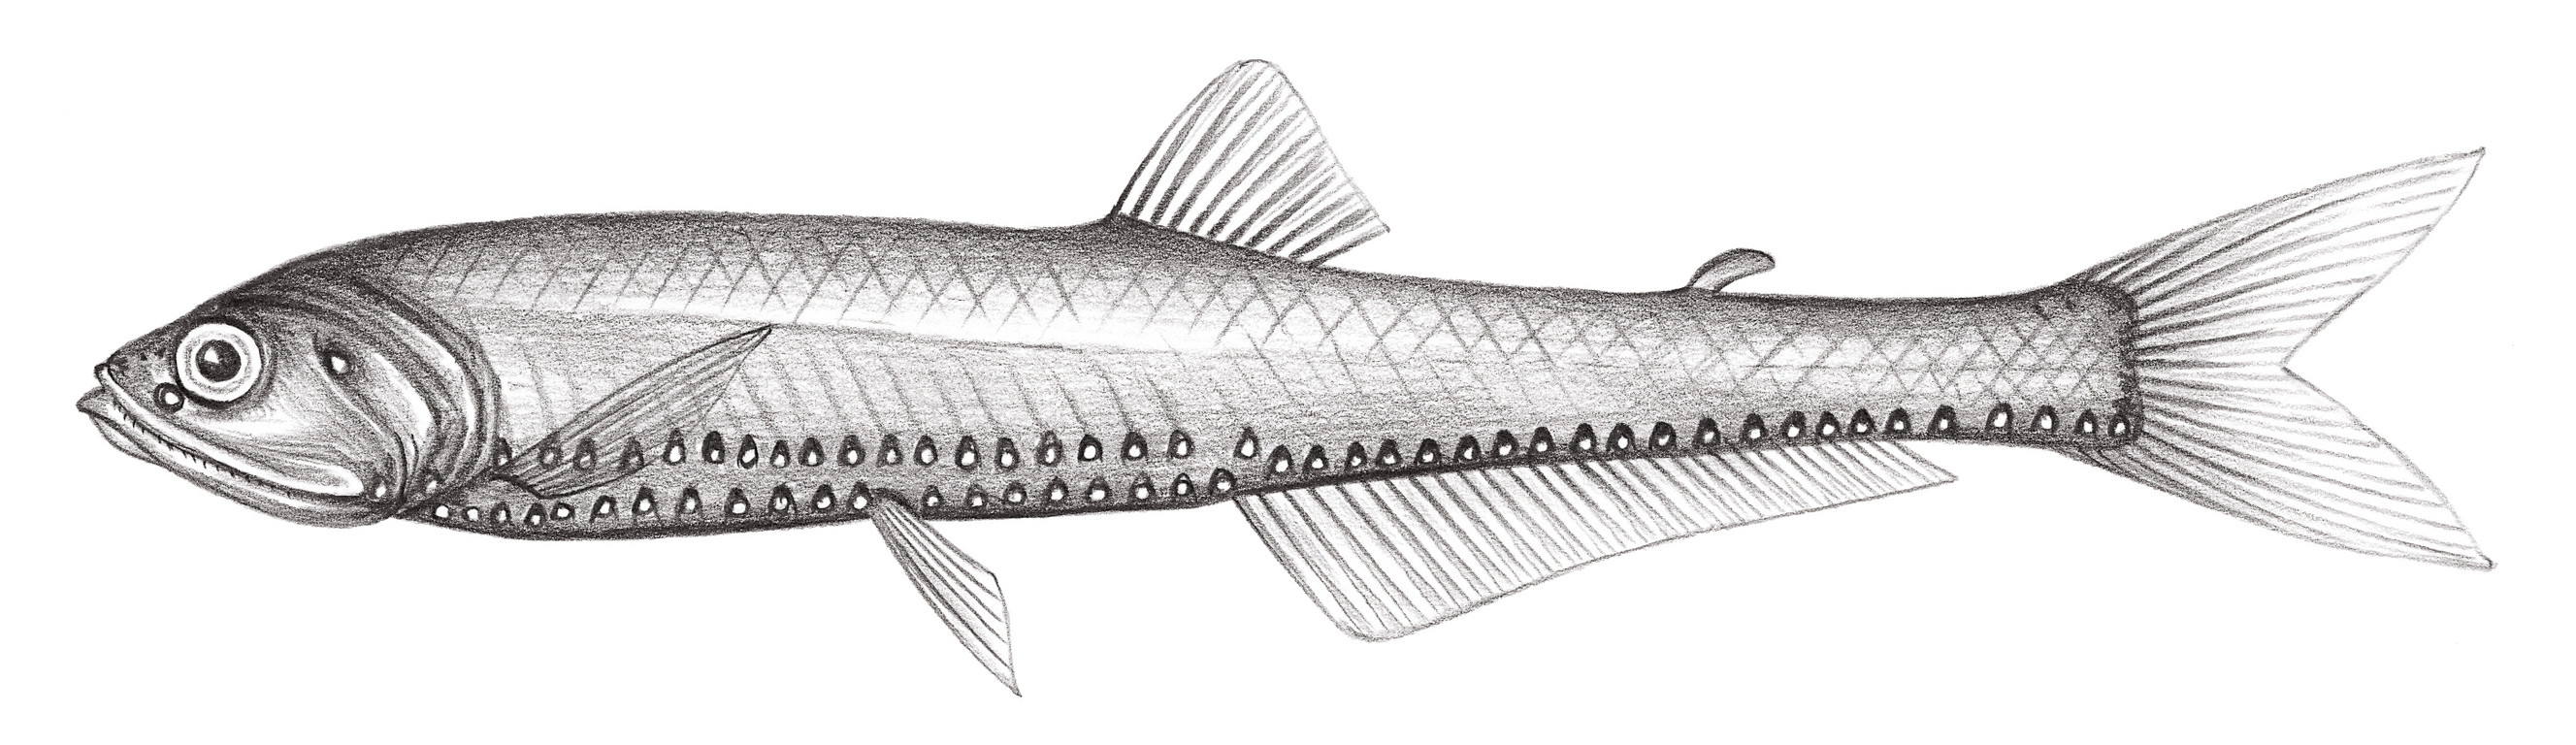 424.	長刀光魚 Polymetme elongata (Matsubara, 1938)